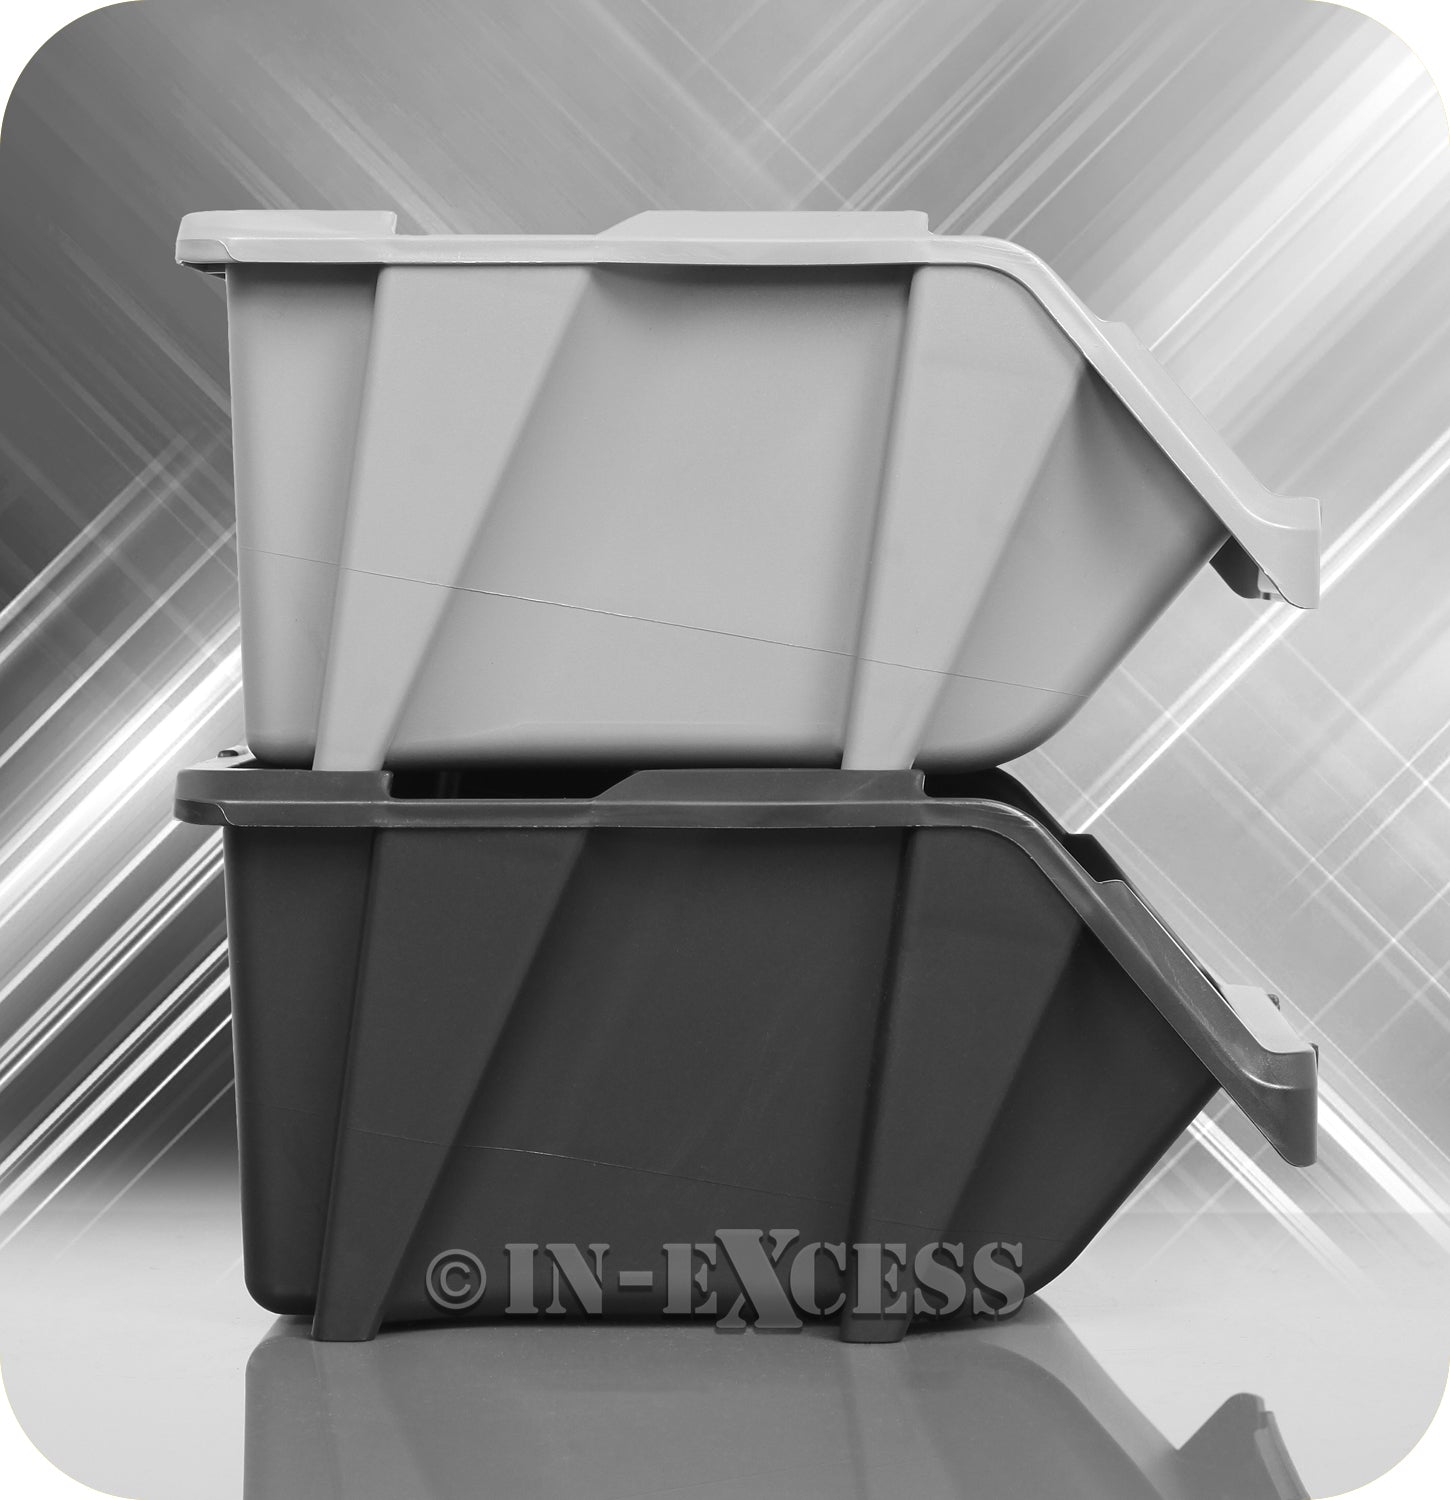 In-Excess Hardware Heavy Duty Multi-Purpose Small Stackable Storage Bin - Grey